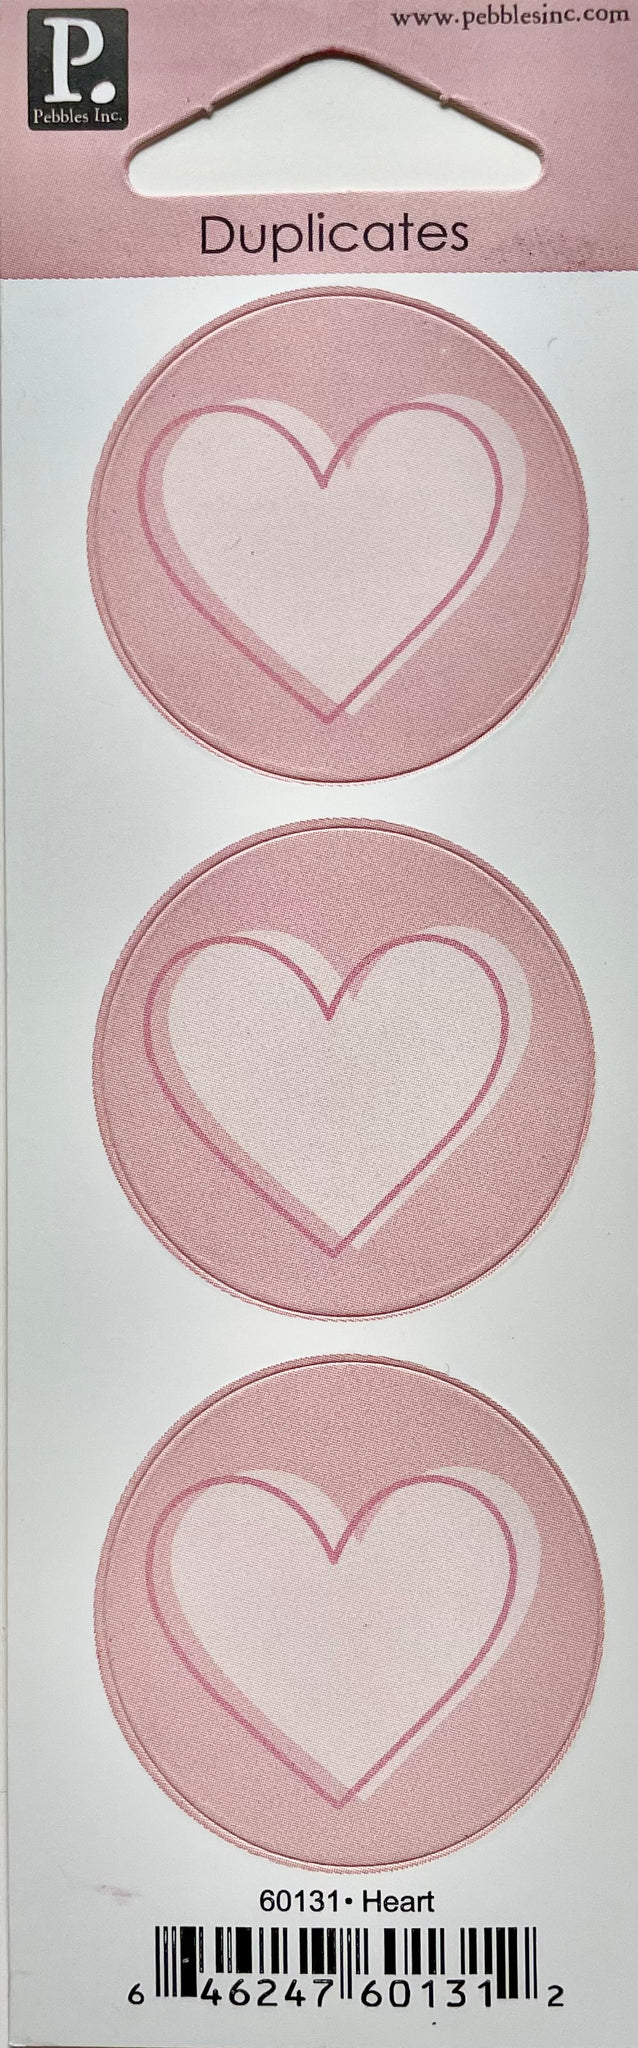 Heart Duplicates Stickers